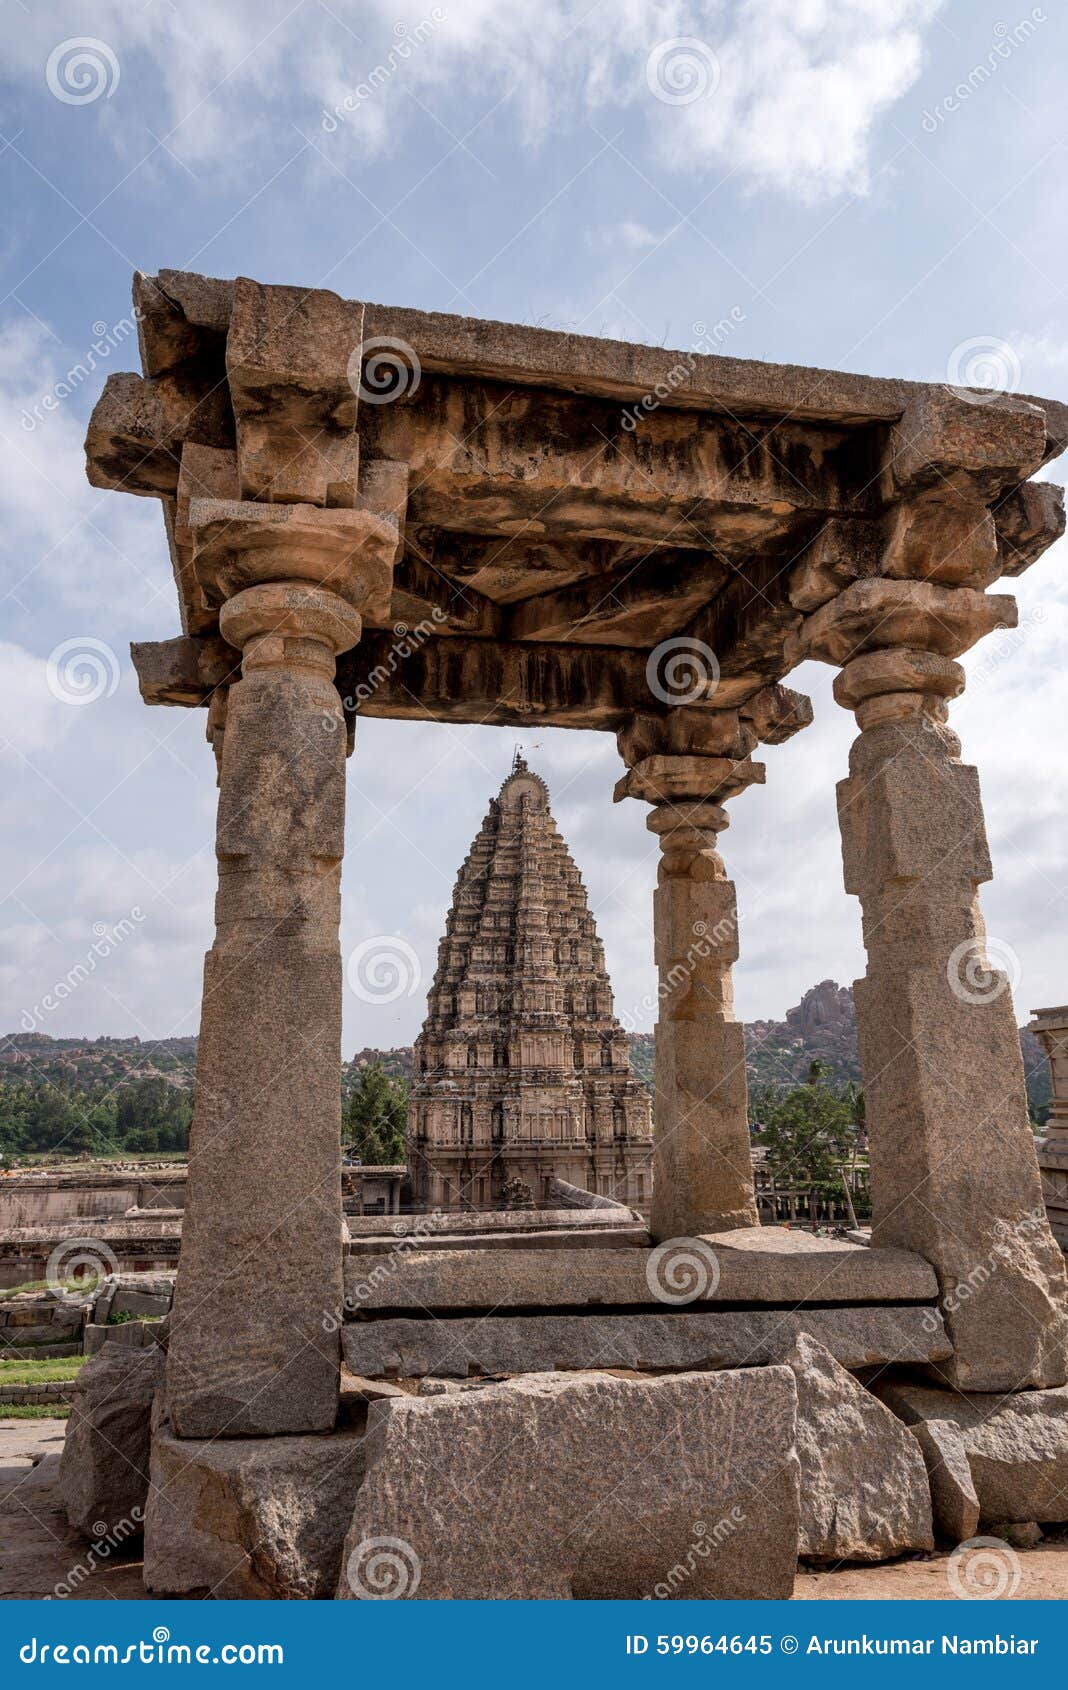 hampi hindu temple